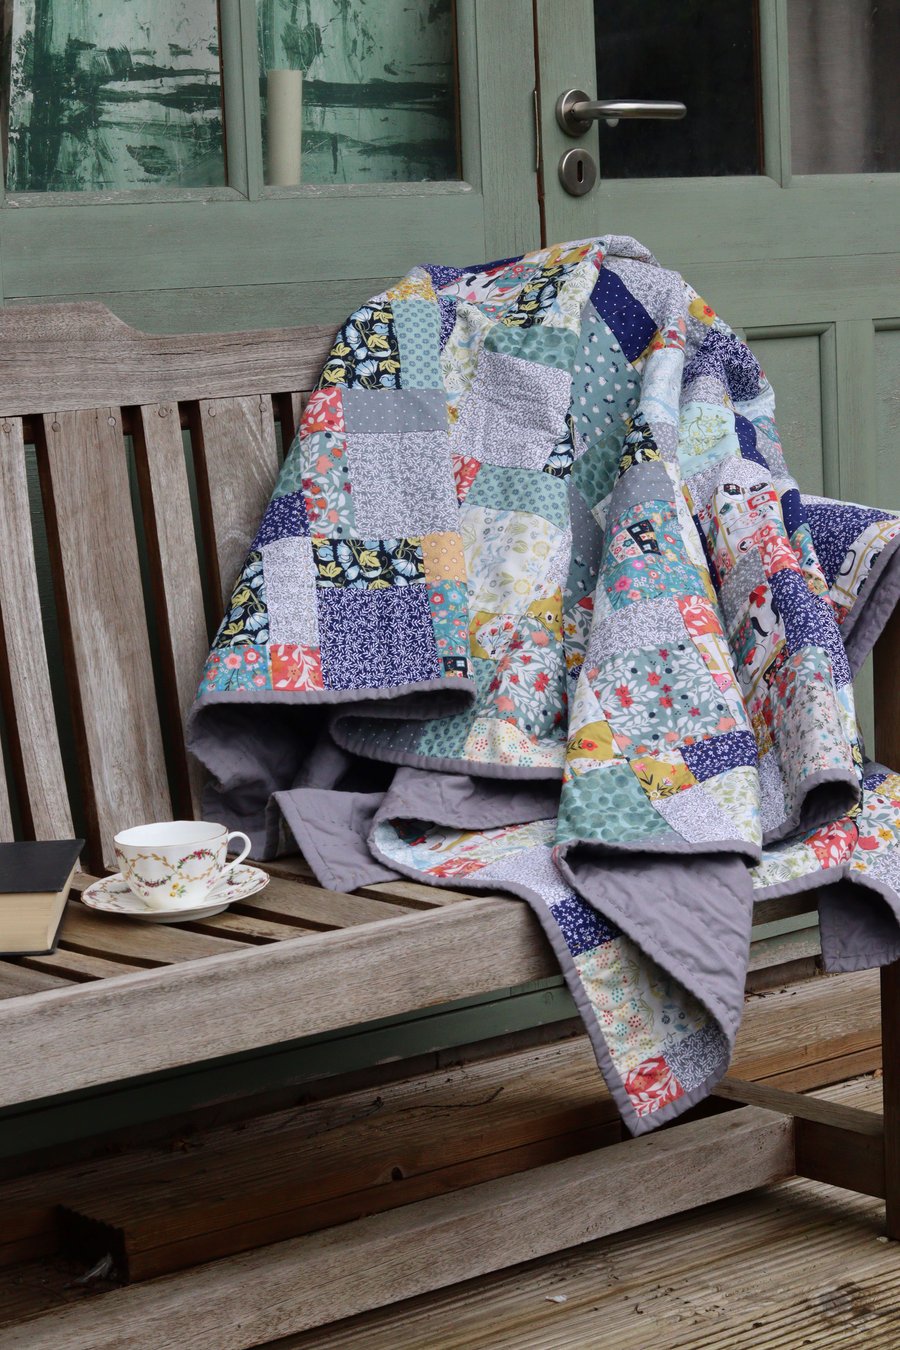 Quilt, single quilt, patchwork quilt, throw, blanket, picnic blanket